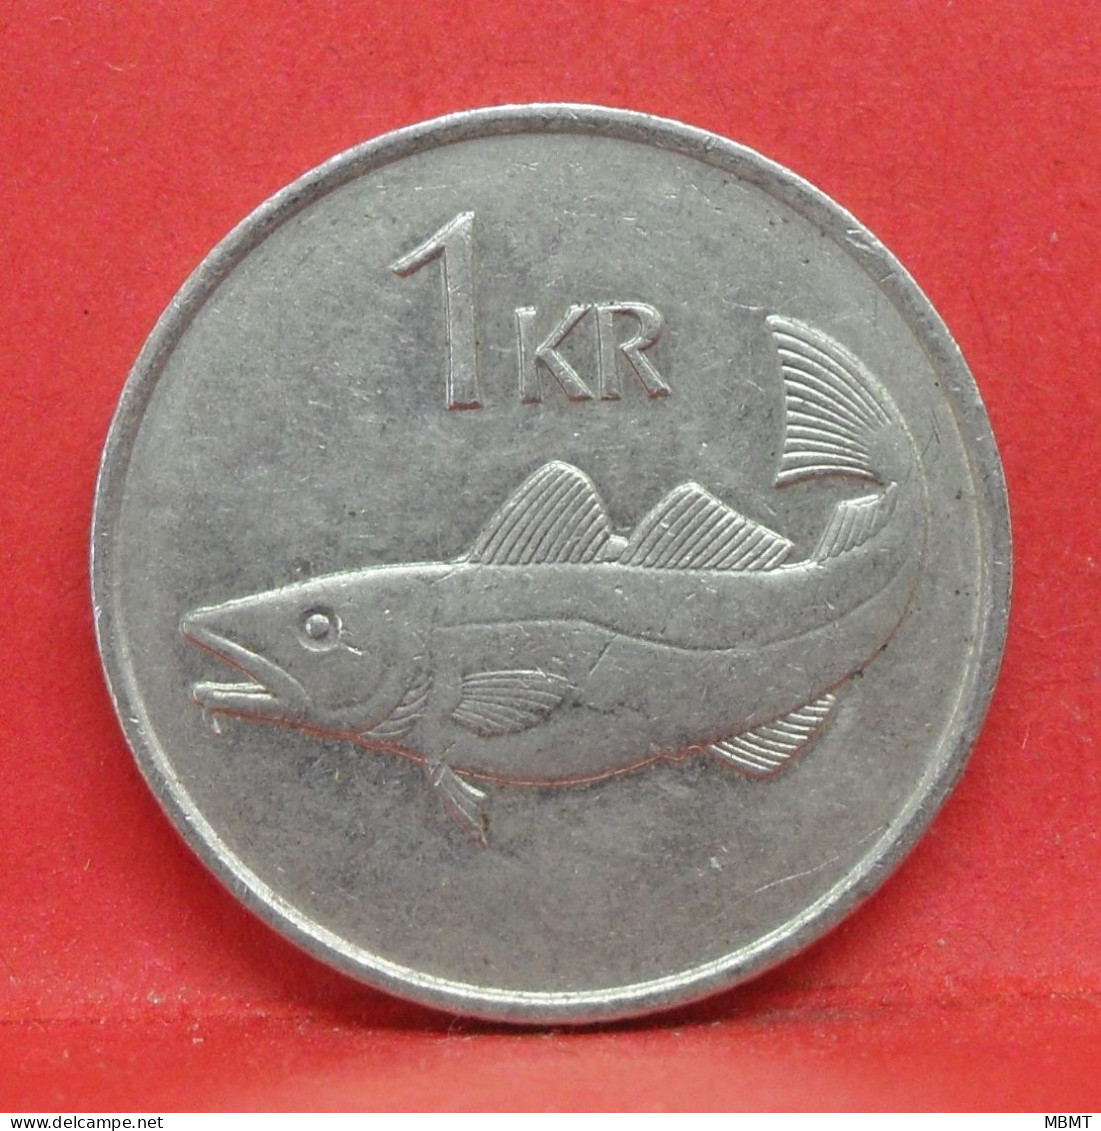 1 Krona 1984 - SUP - Pièce De Monnaie Islande - Article N°3298 - Iceland